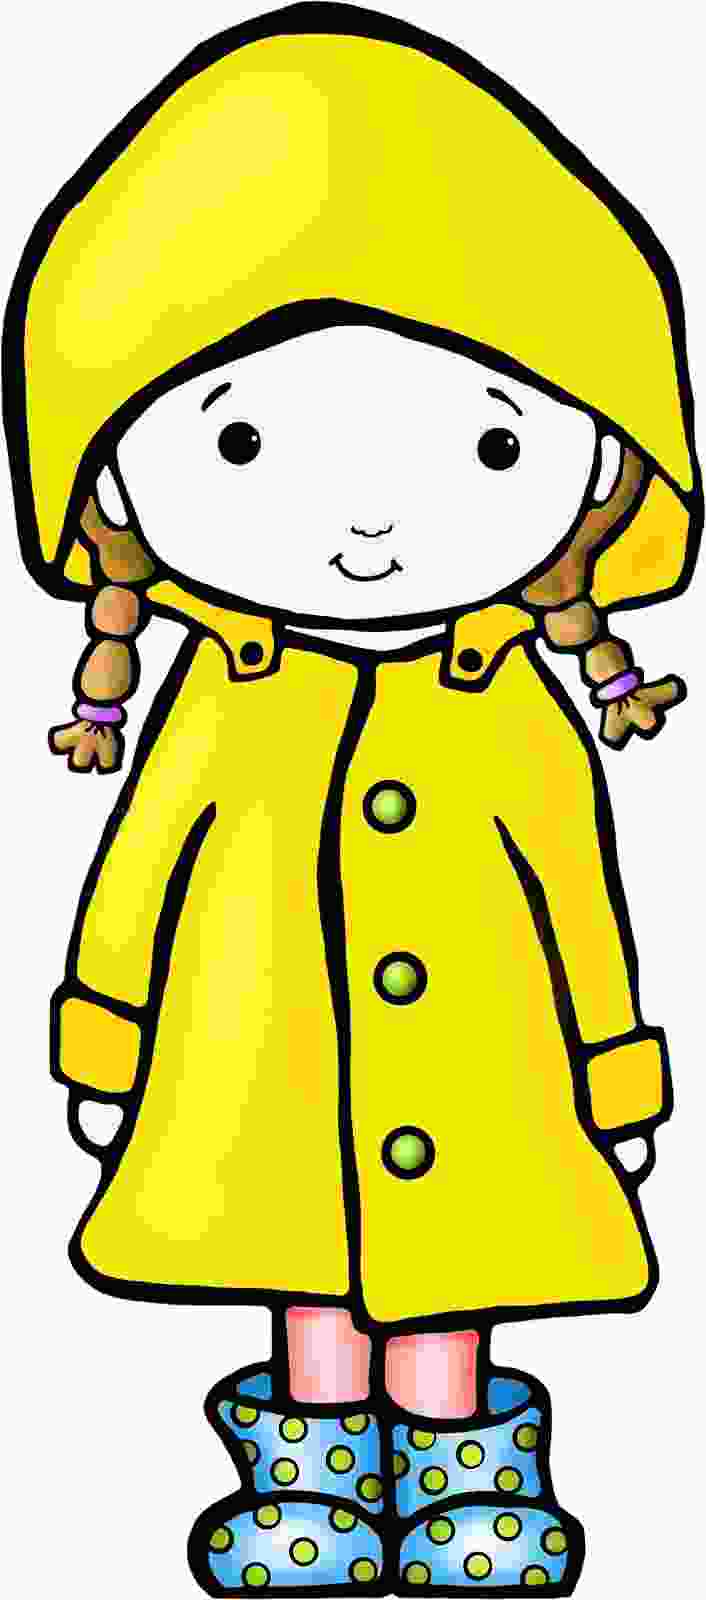 Free Raincoat Cliparts, Download Free Raincoat Cliparts png images ...